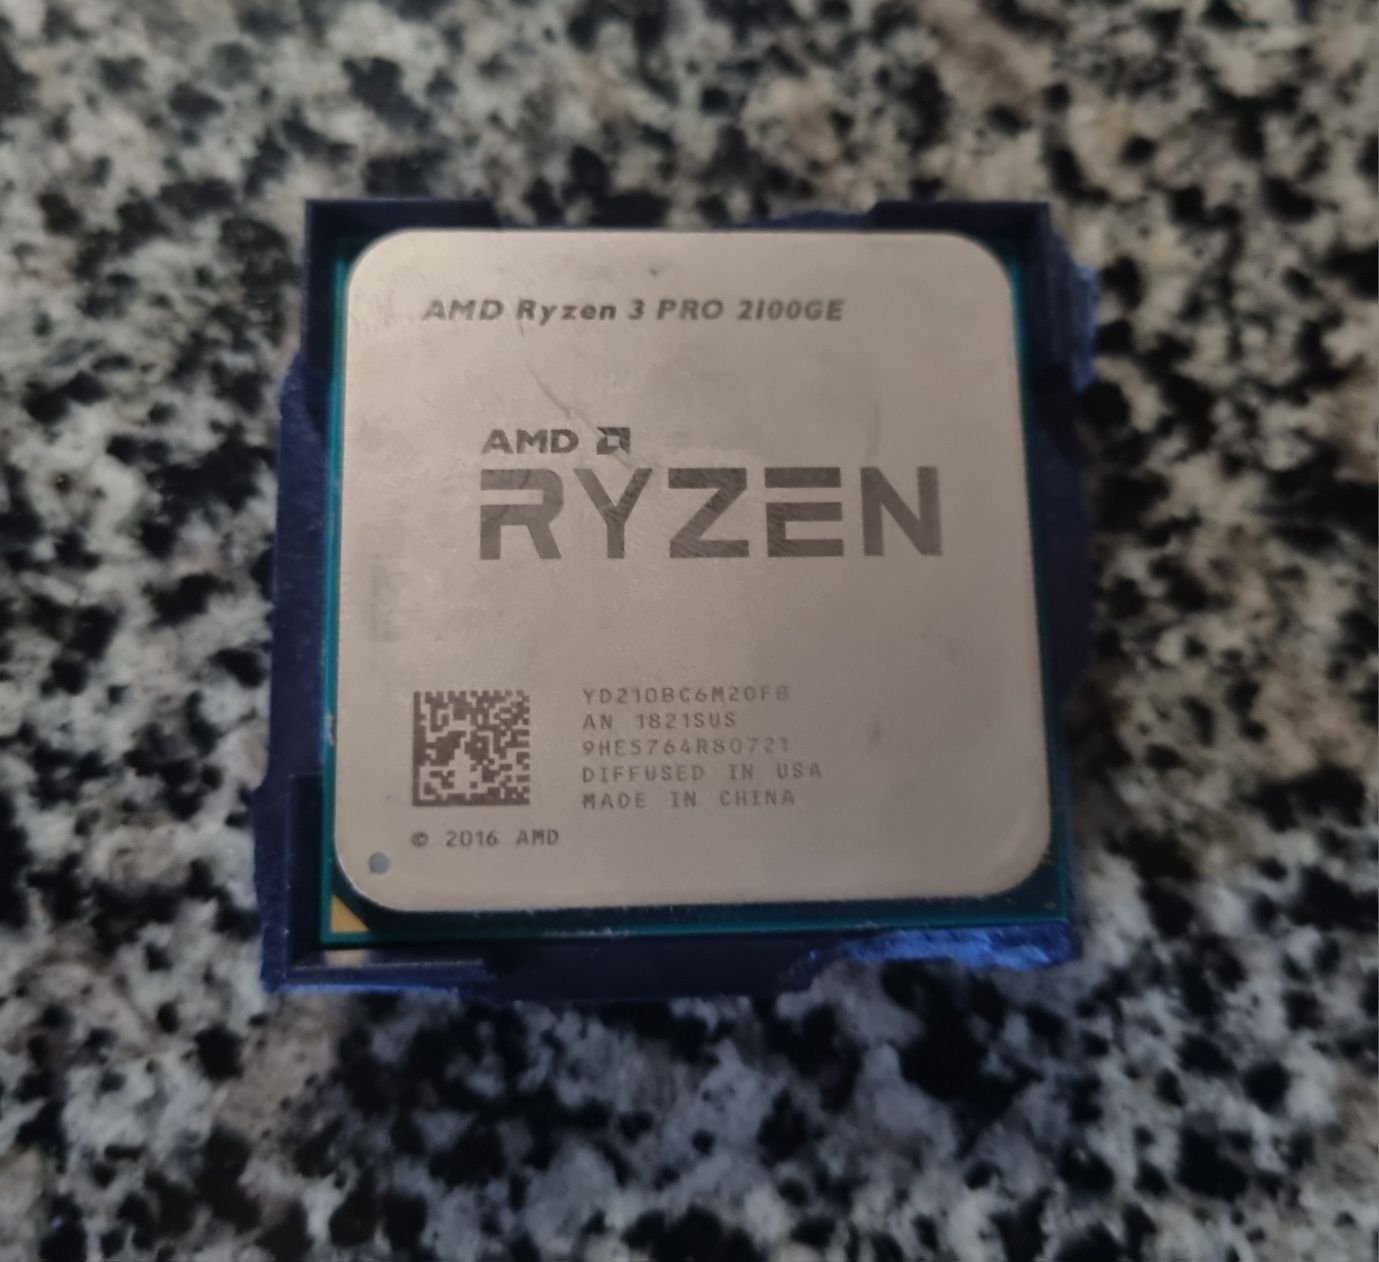 AMD Ryzen 3 PRO 2100GE w/ Radeon Vega Graphics